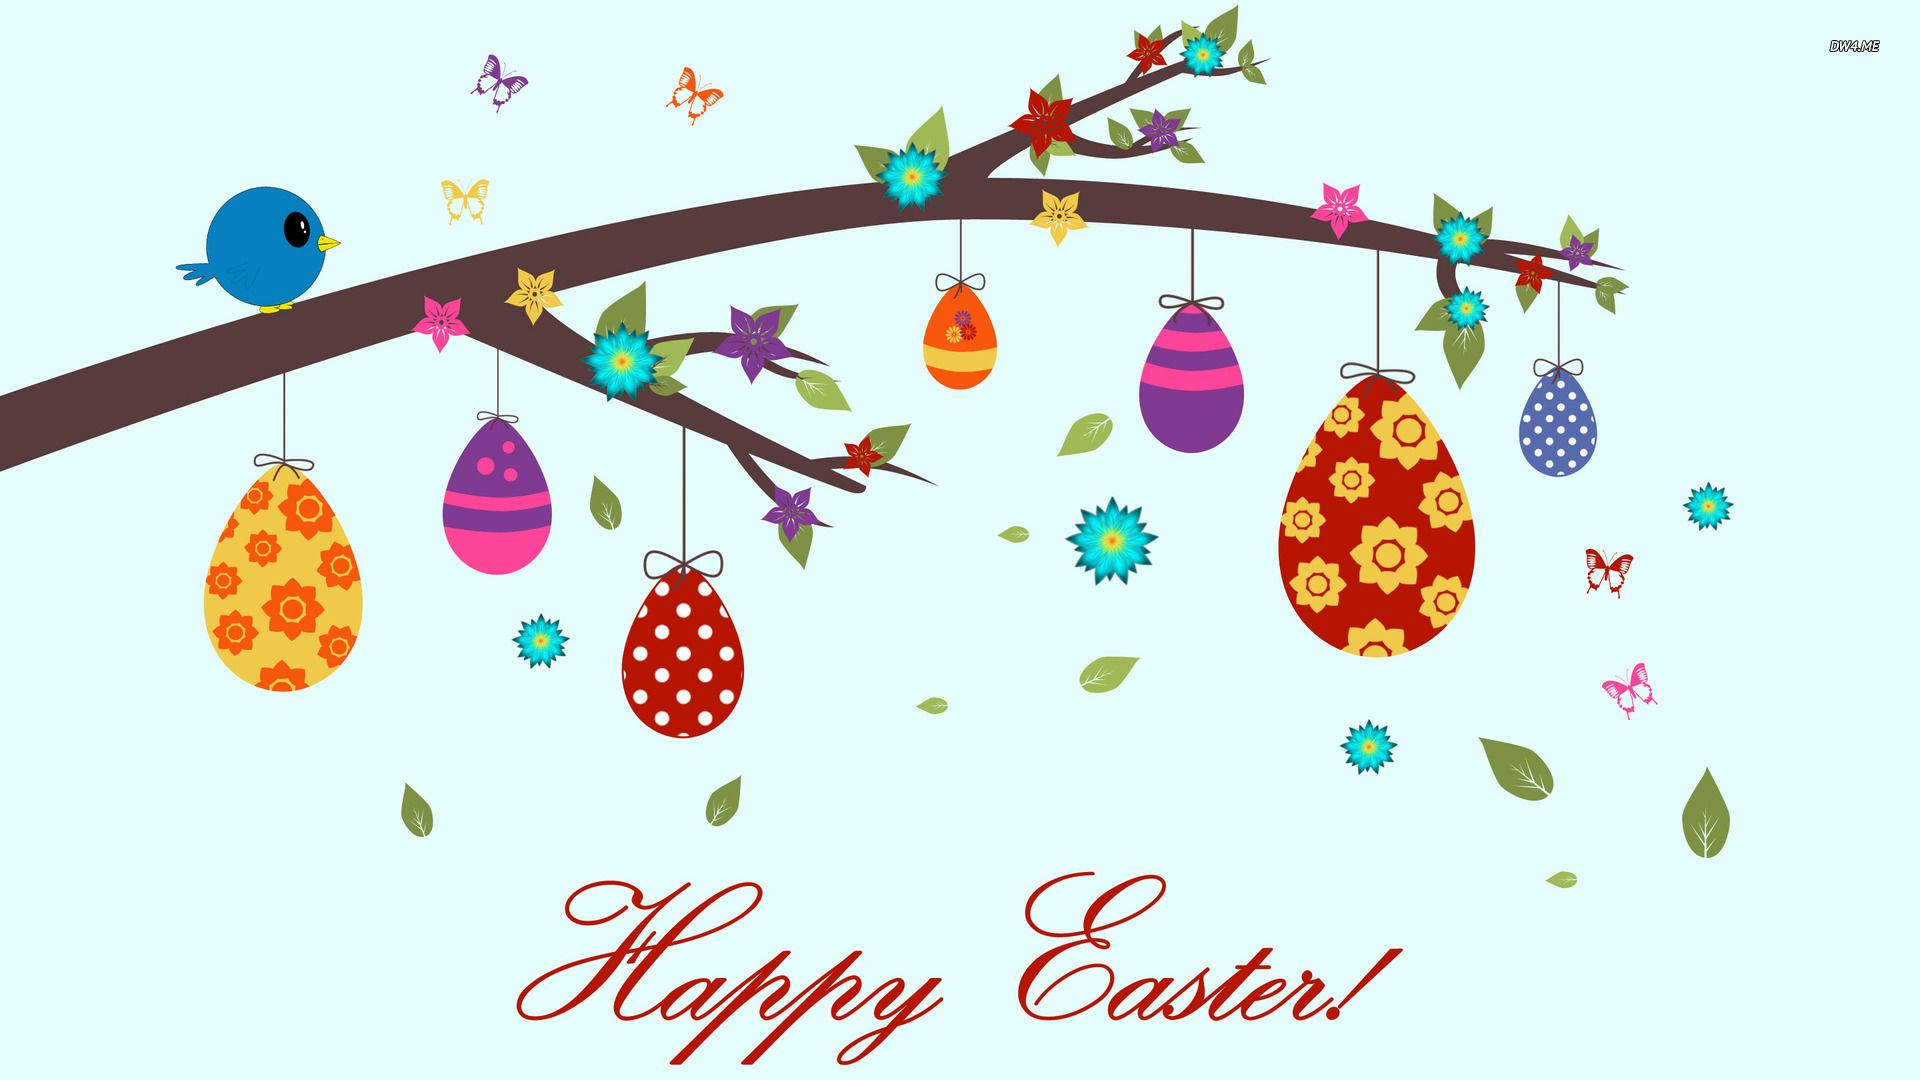 "Wishing you a wonderful Easter!" Wallpaper